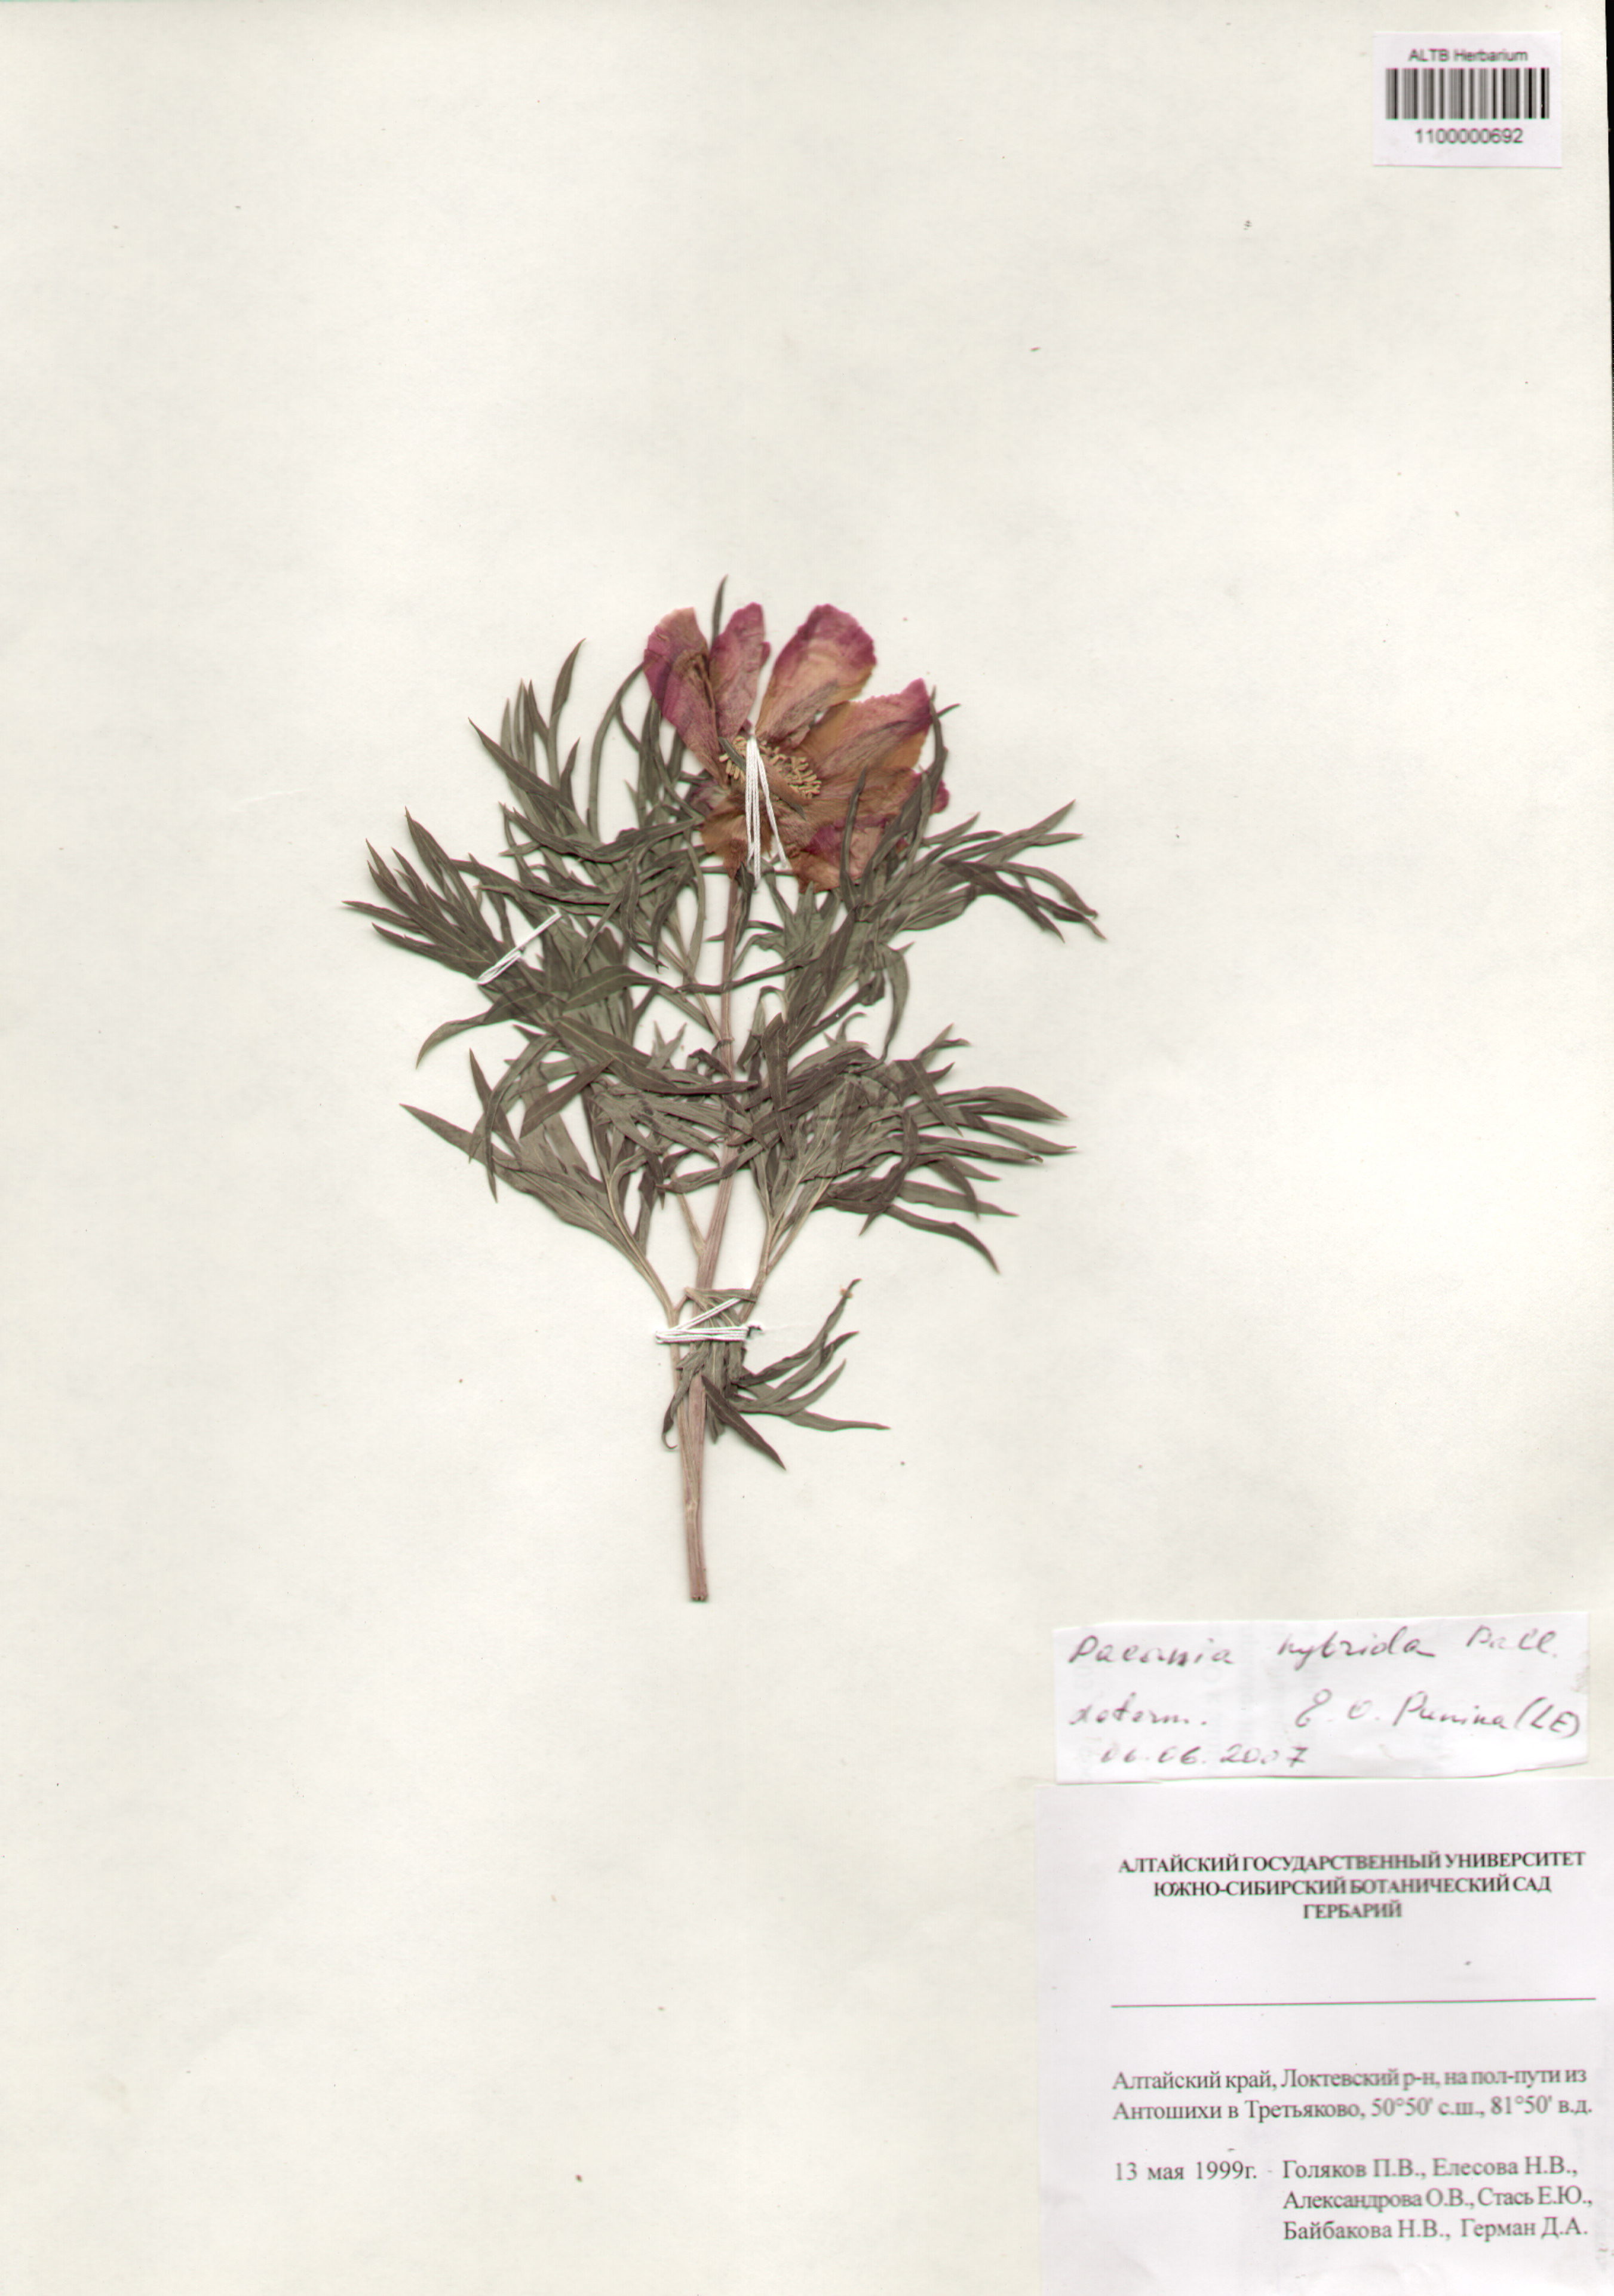 Paeoniaceae,Paeonia hybrida Pall.